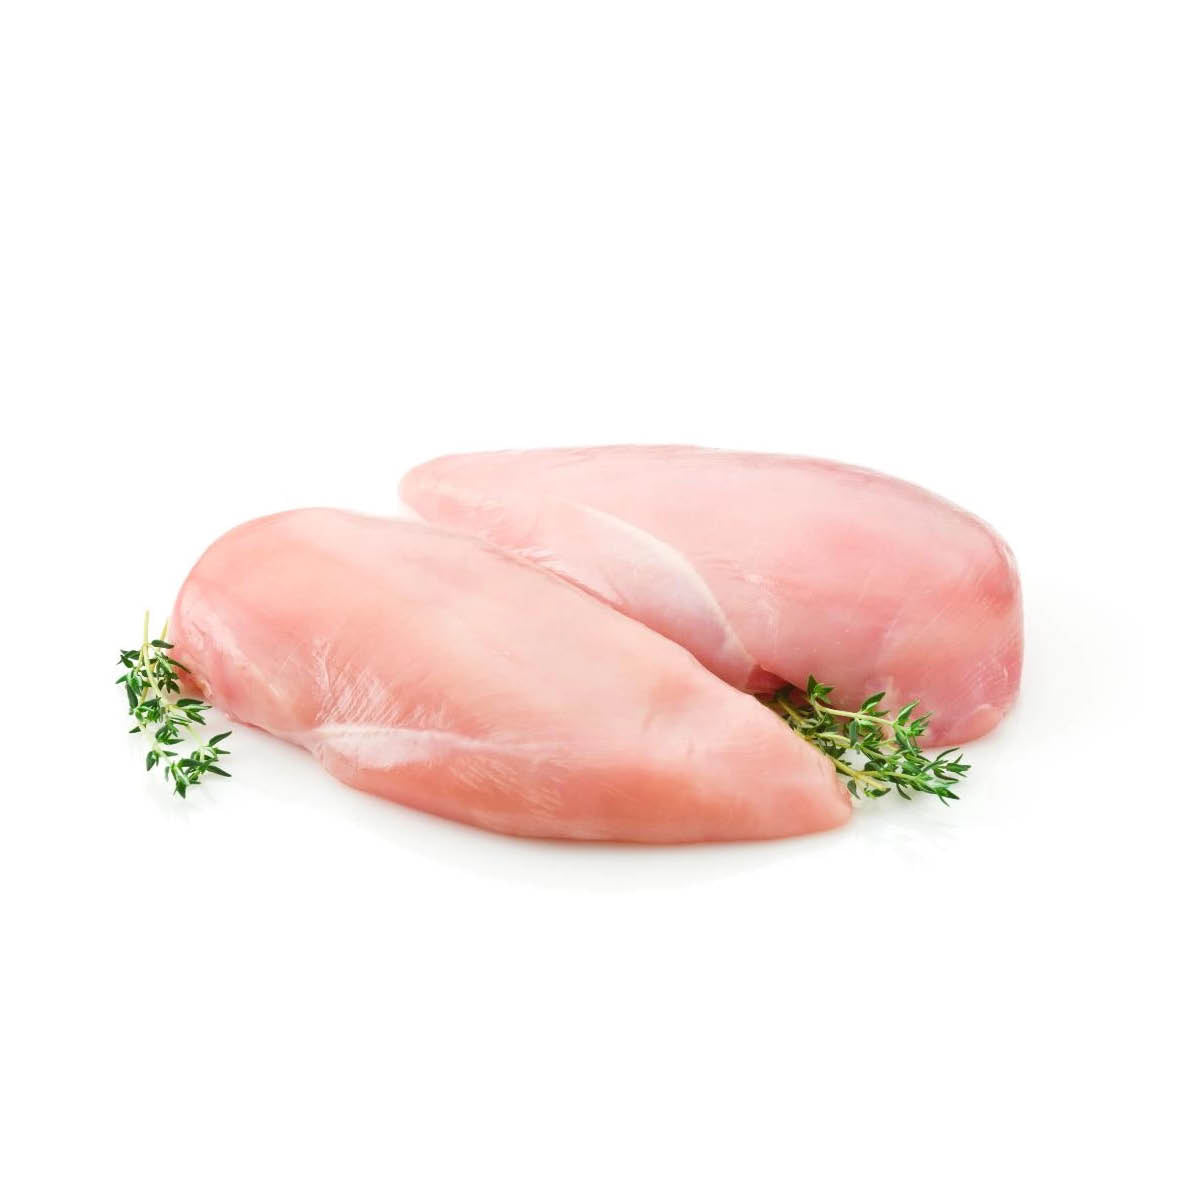 FROZEN Boneless Skinless Chicken Breast, 1kg